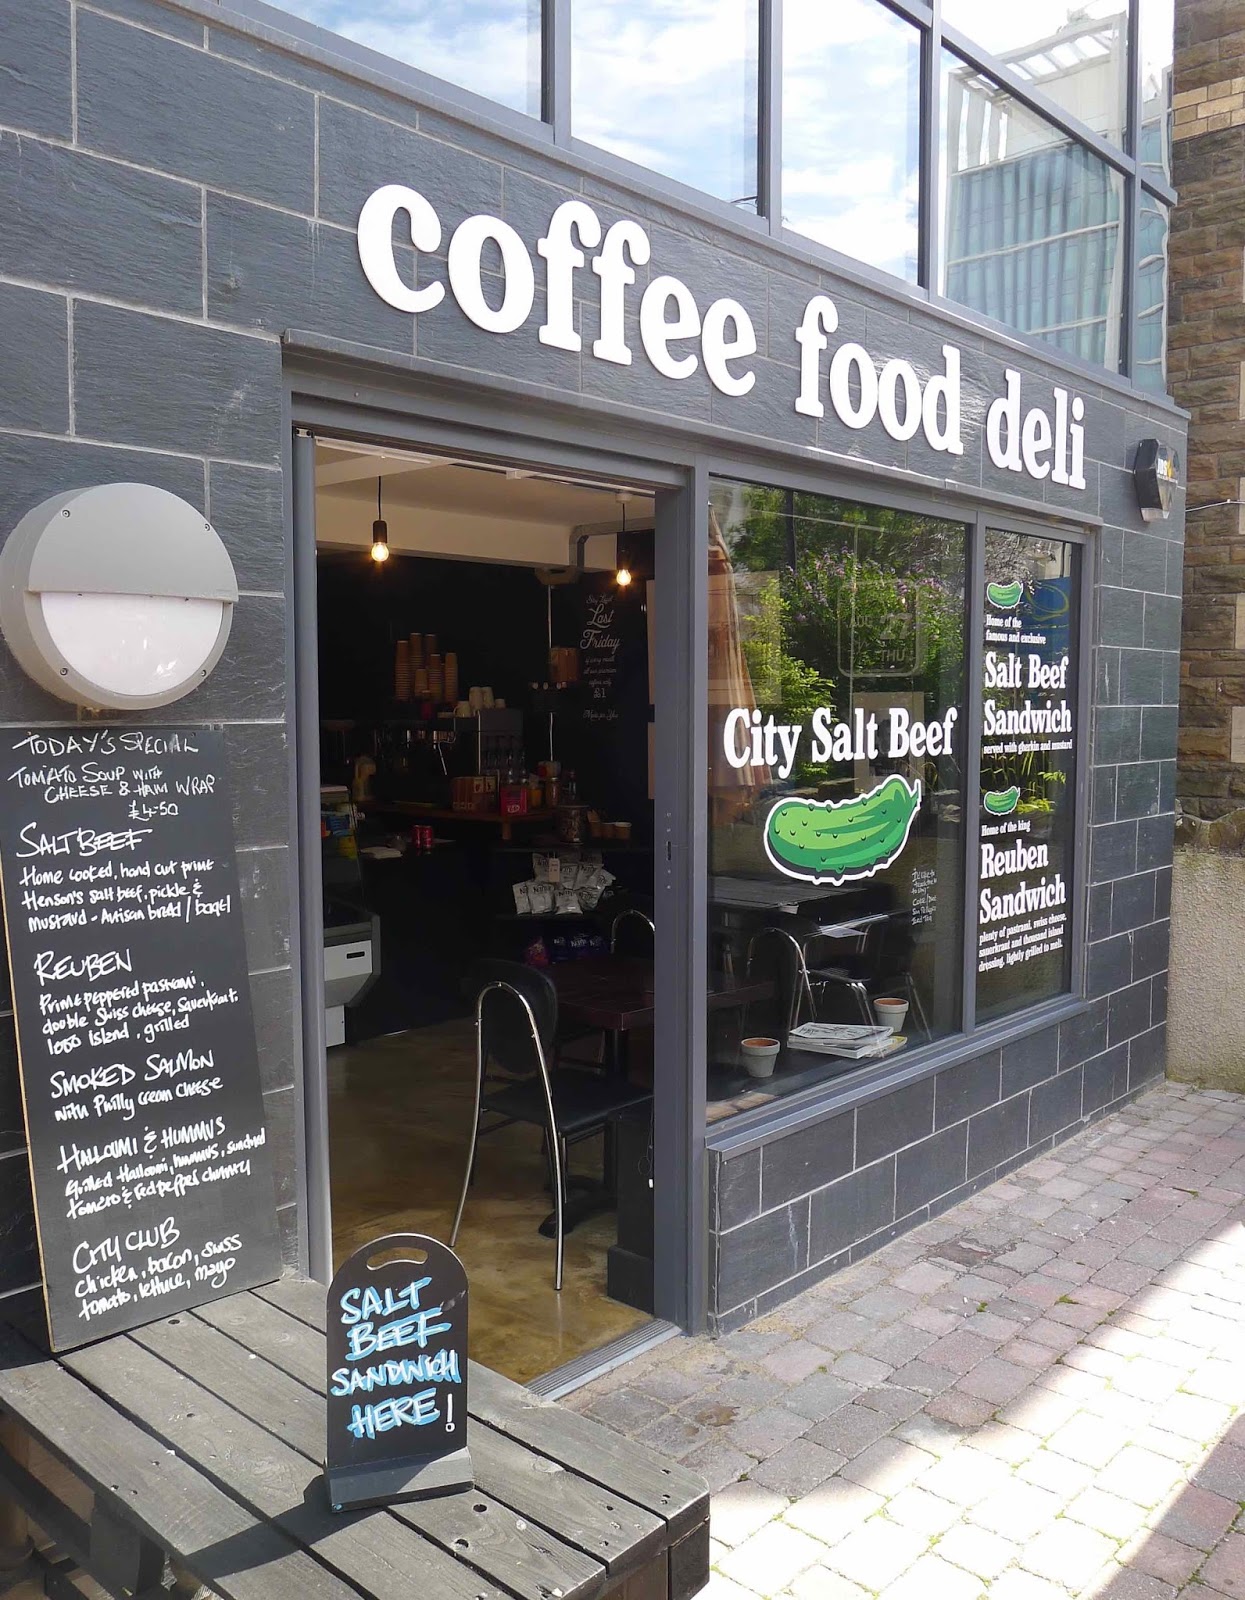 Gourmet Gorro - Cardiff food blog featuring restaurant reviews